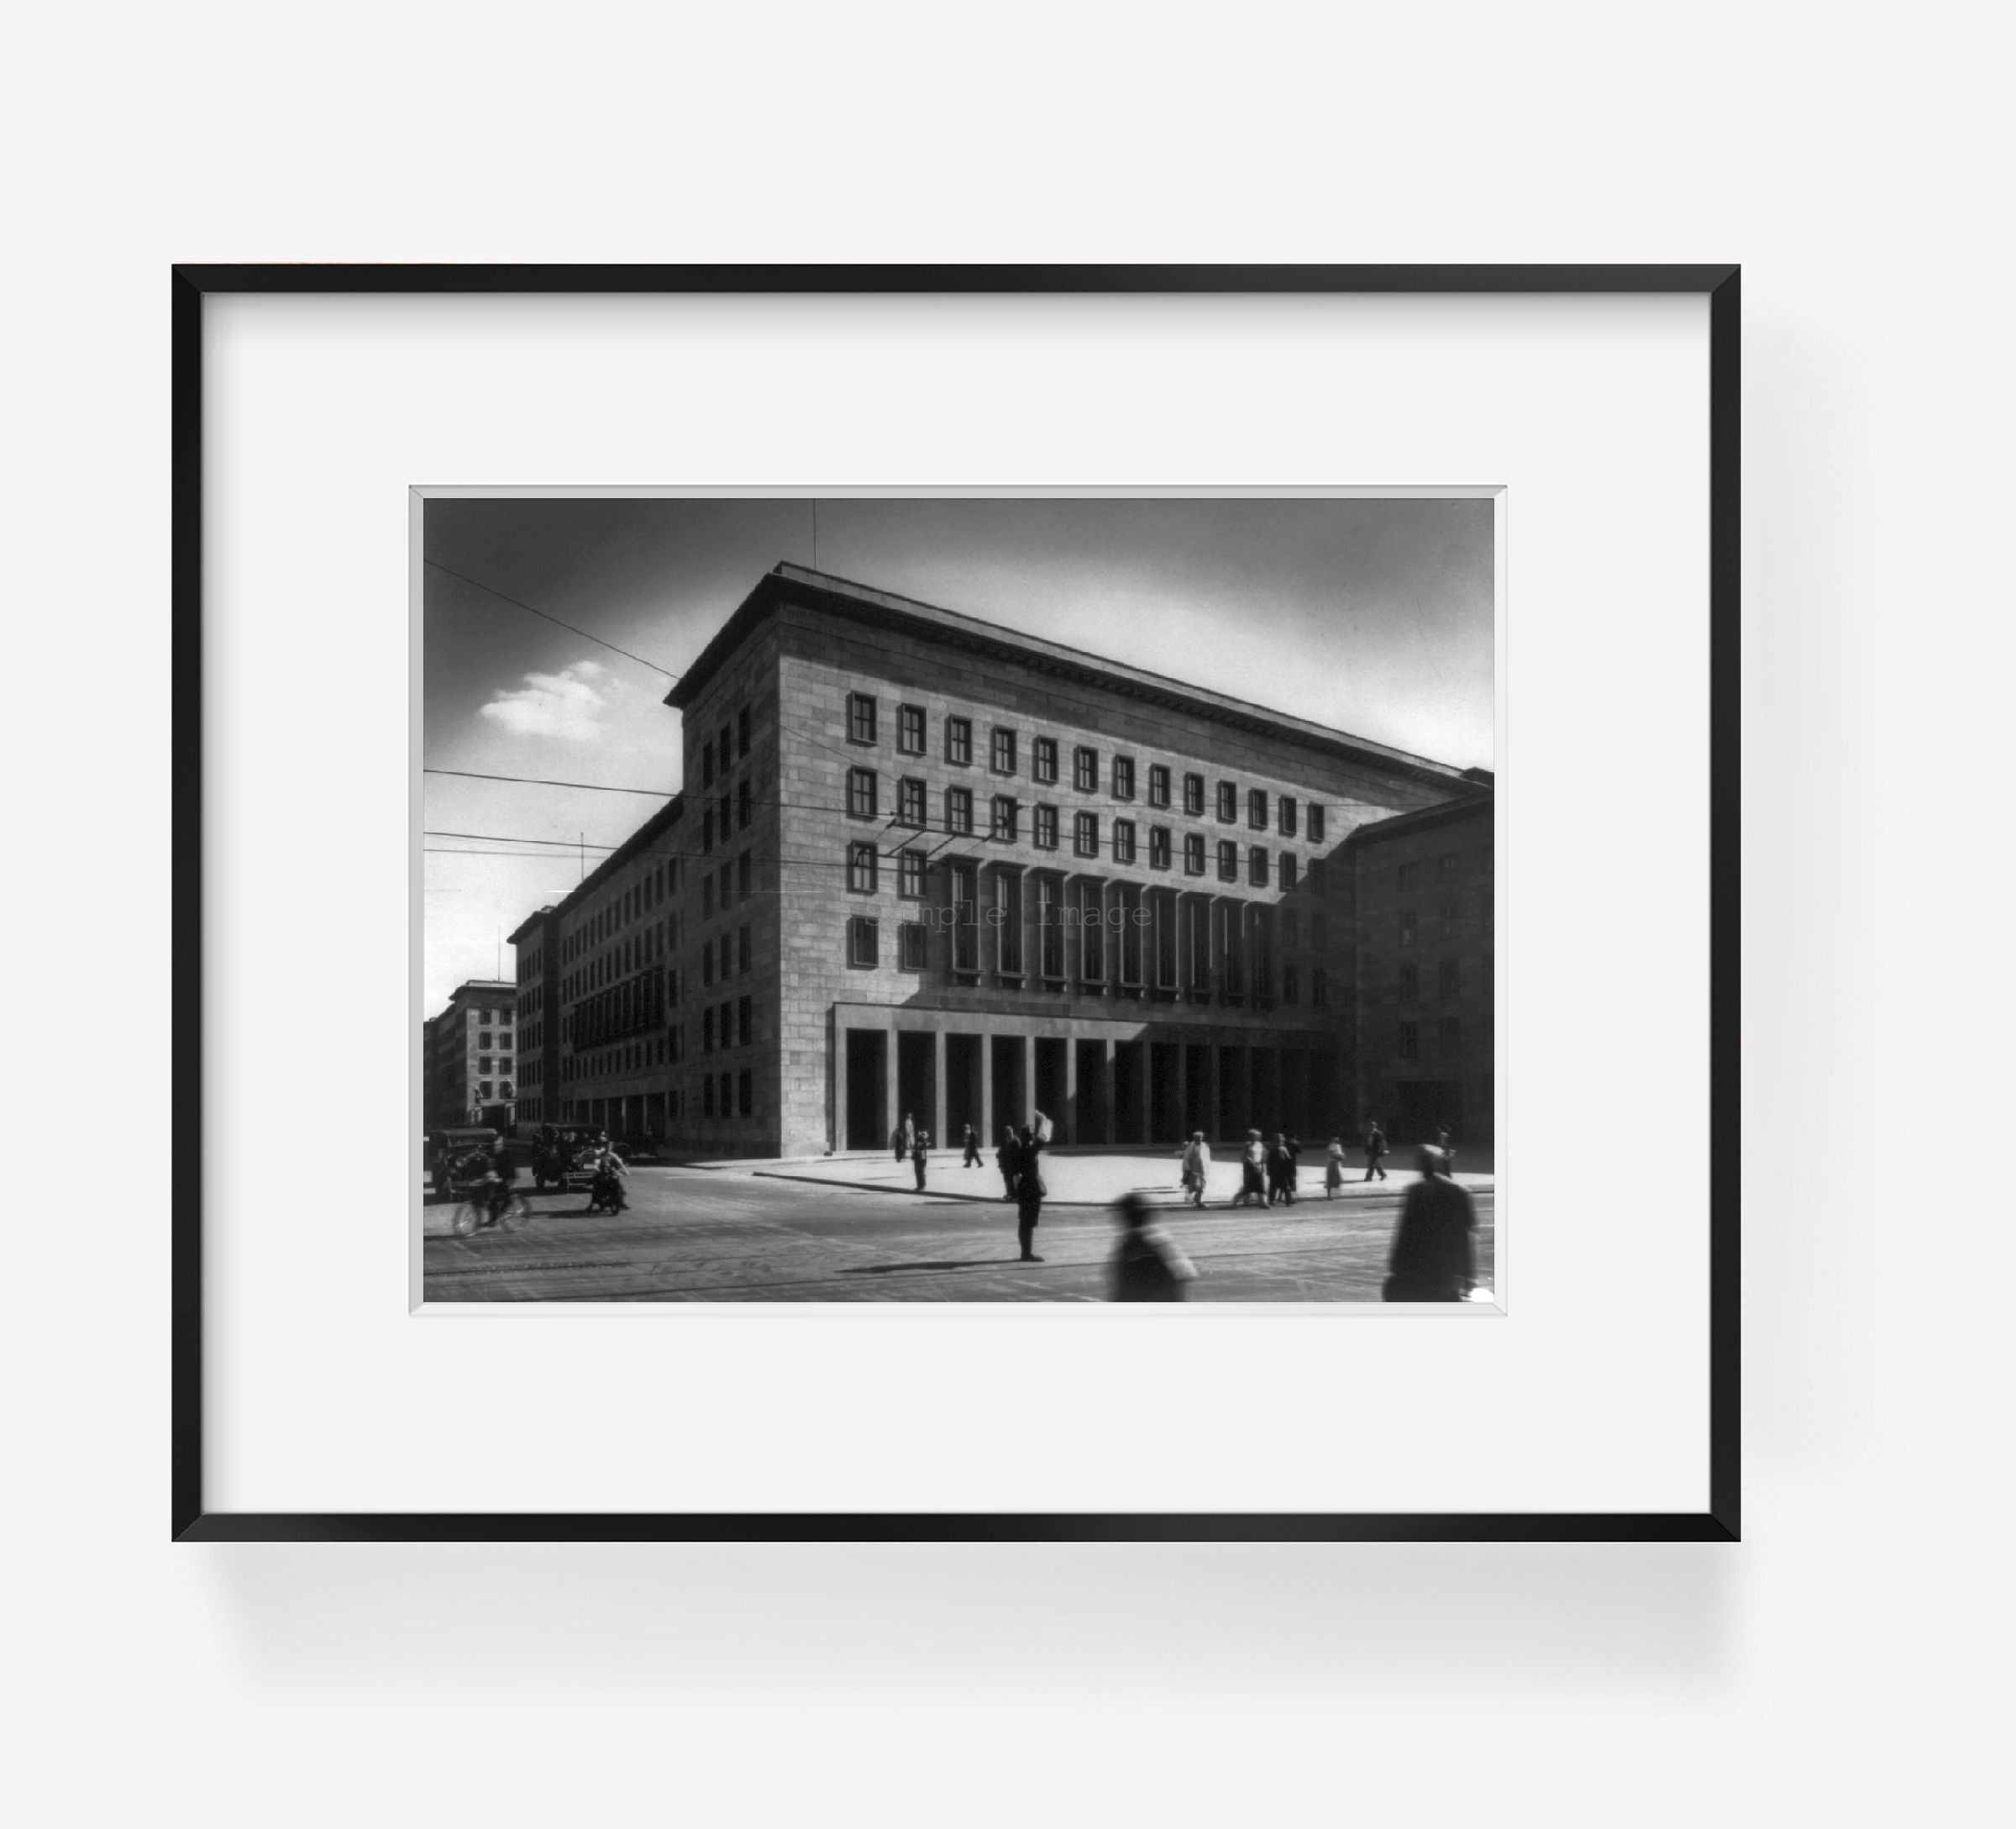 ca. 1939 photograph of Reichsluftfahrtministerium Summary: Air ministry building